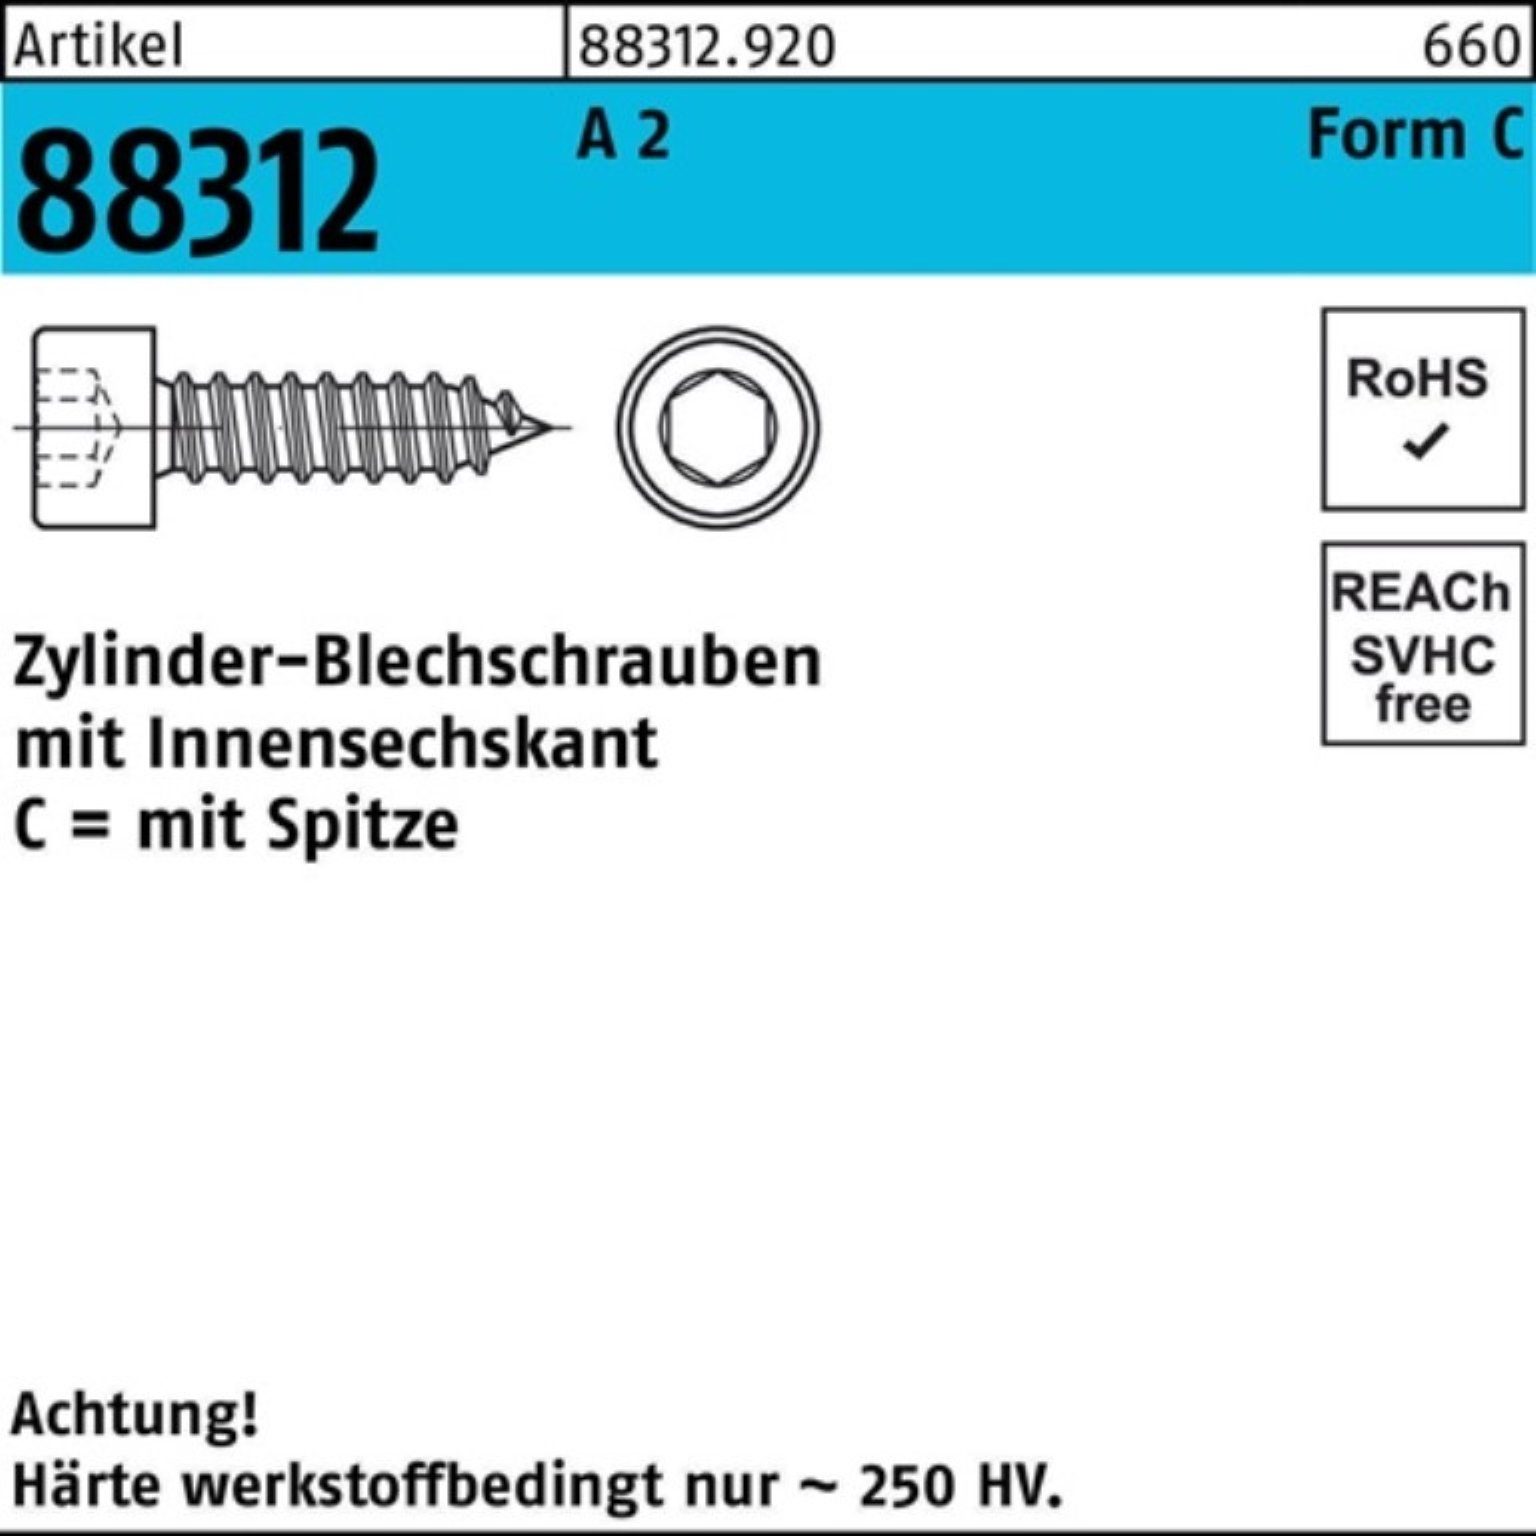 Reyher Blechschraube 500er Pack Zylinderblechschraube R 88312 Spitze/Innen-6kt C 5,5x 19 A